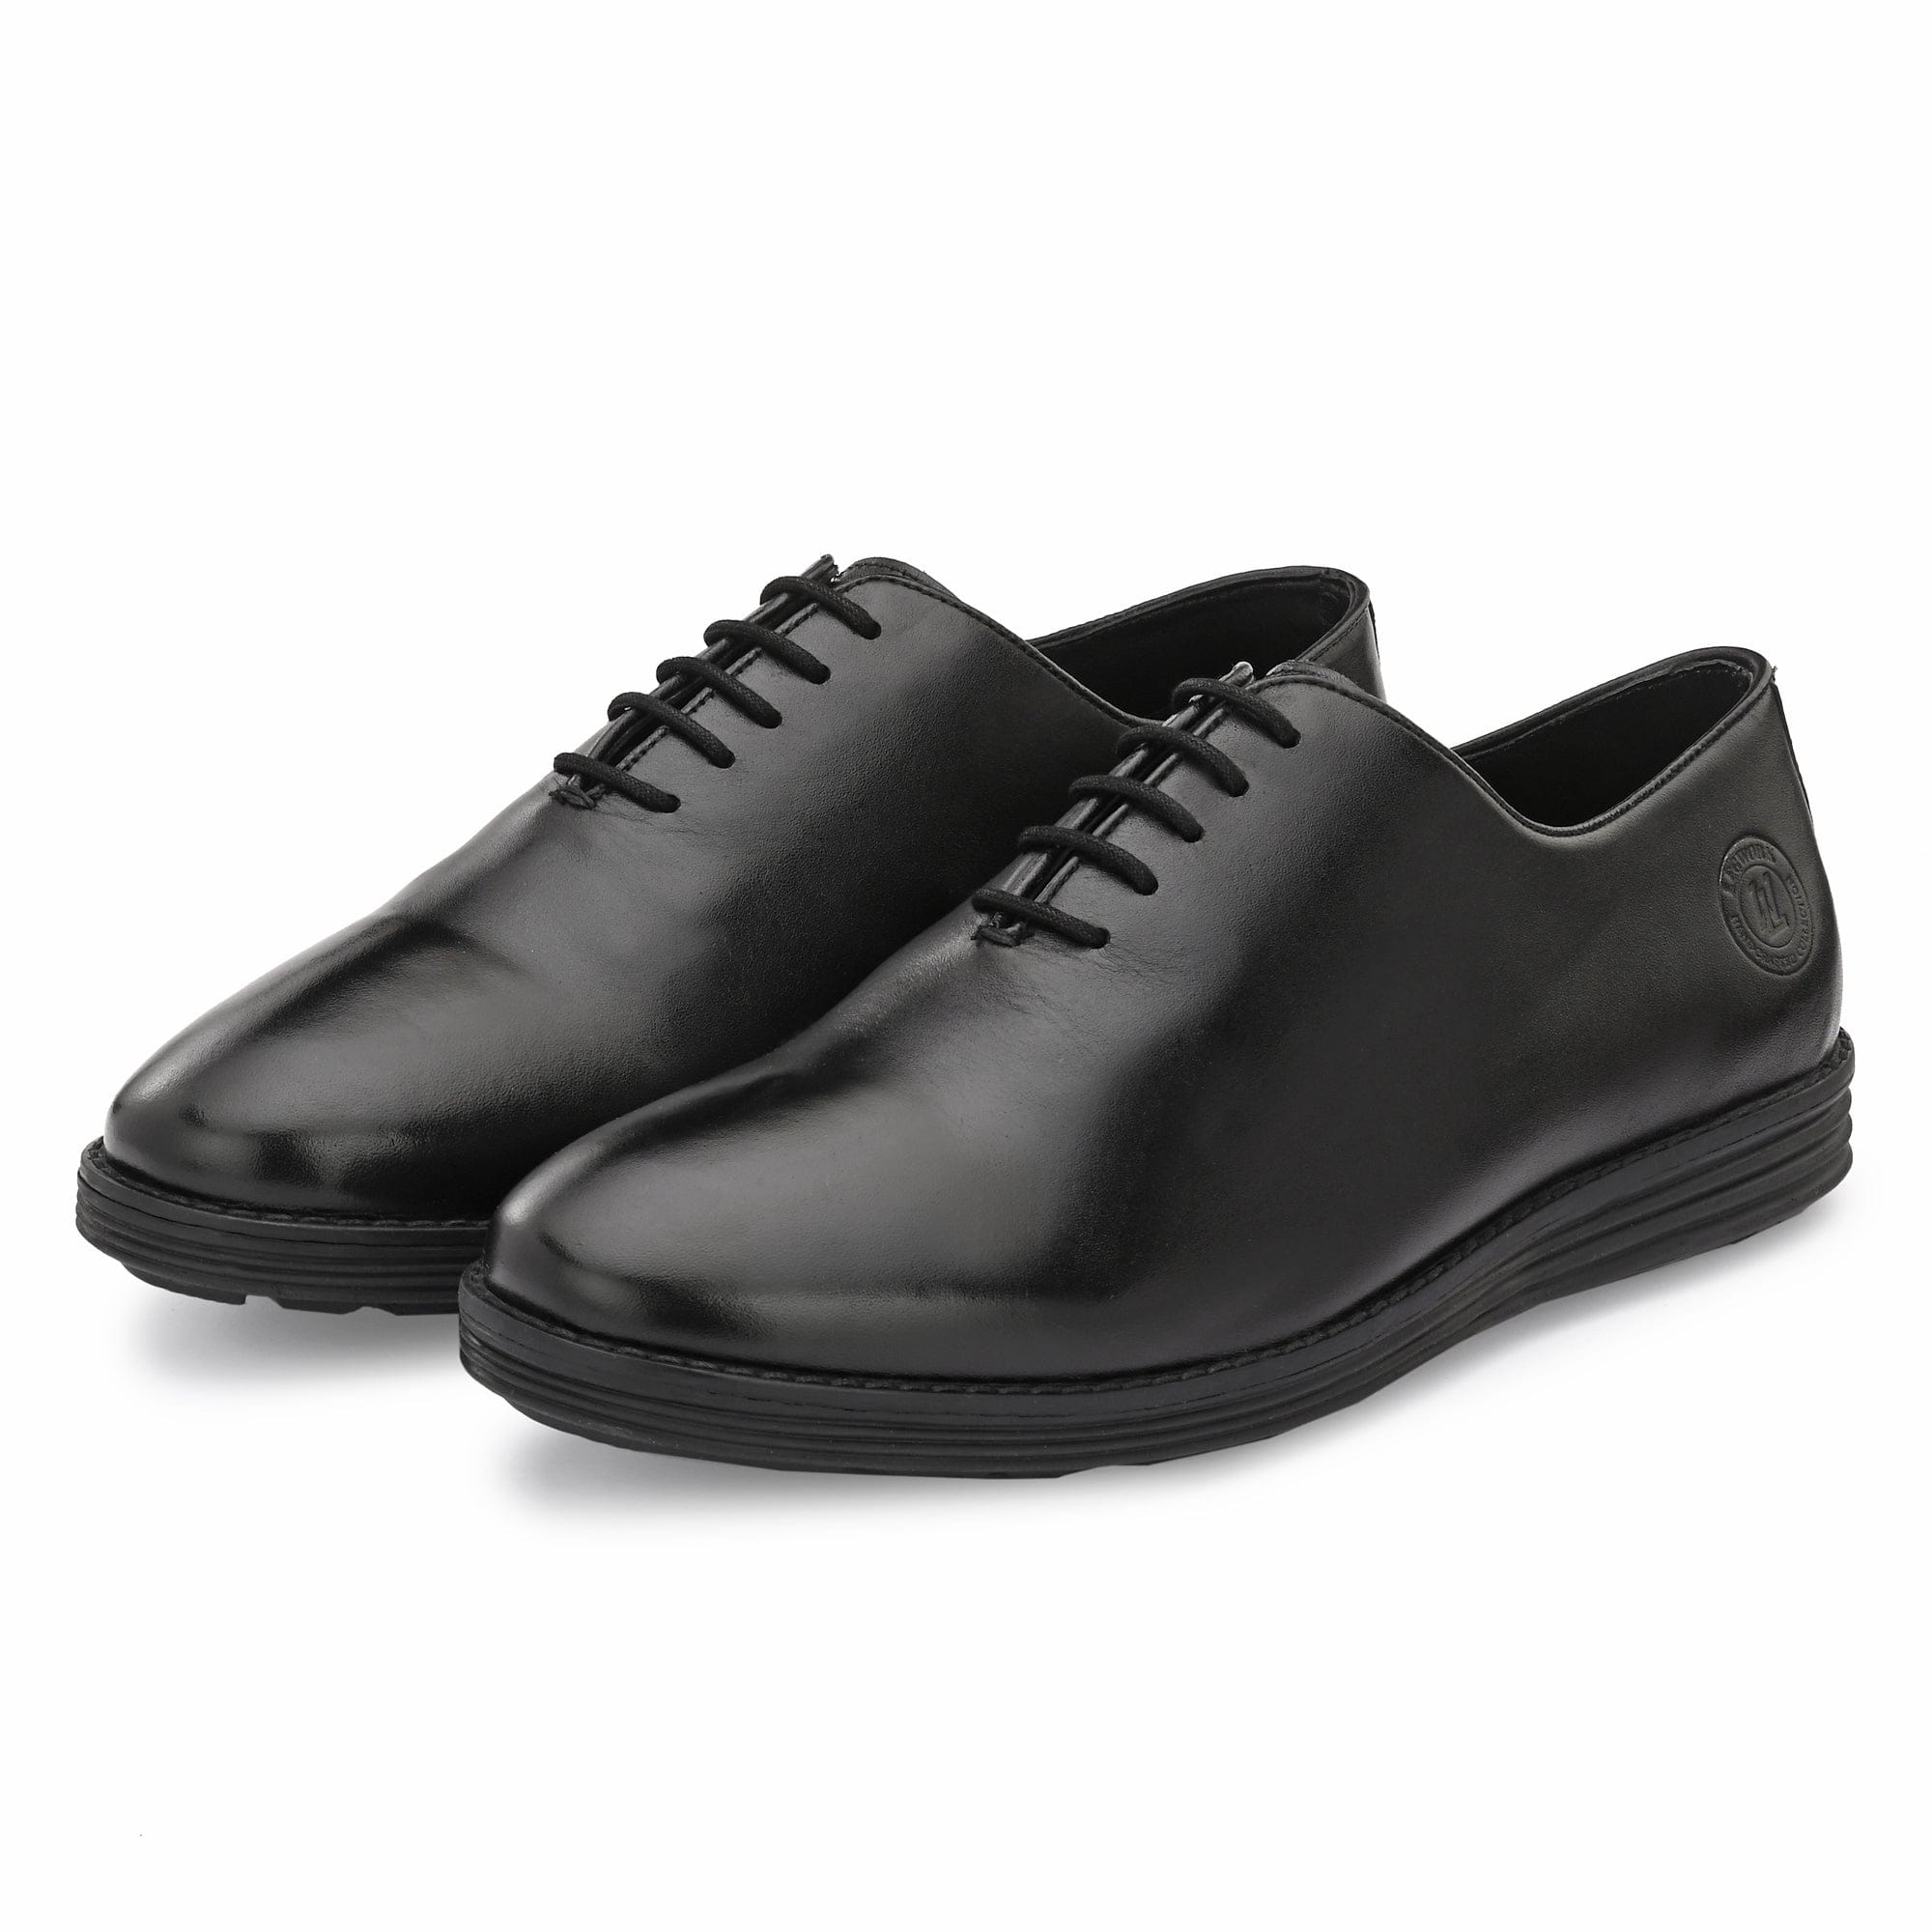 Legwork Wholecut Oxford 2.0 Black Italian Leather Shoes